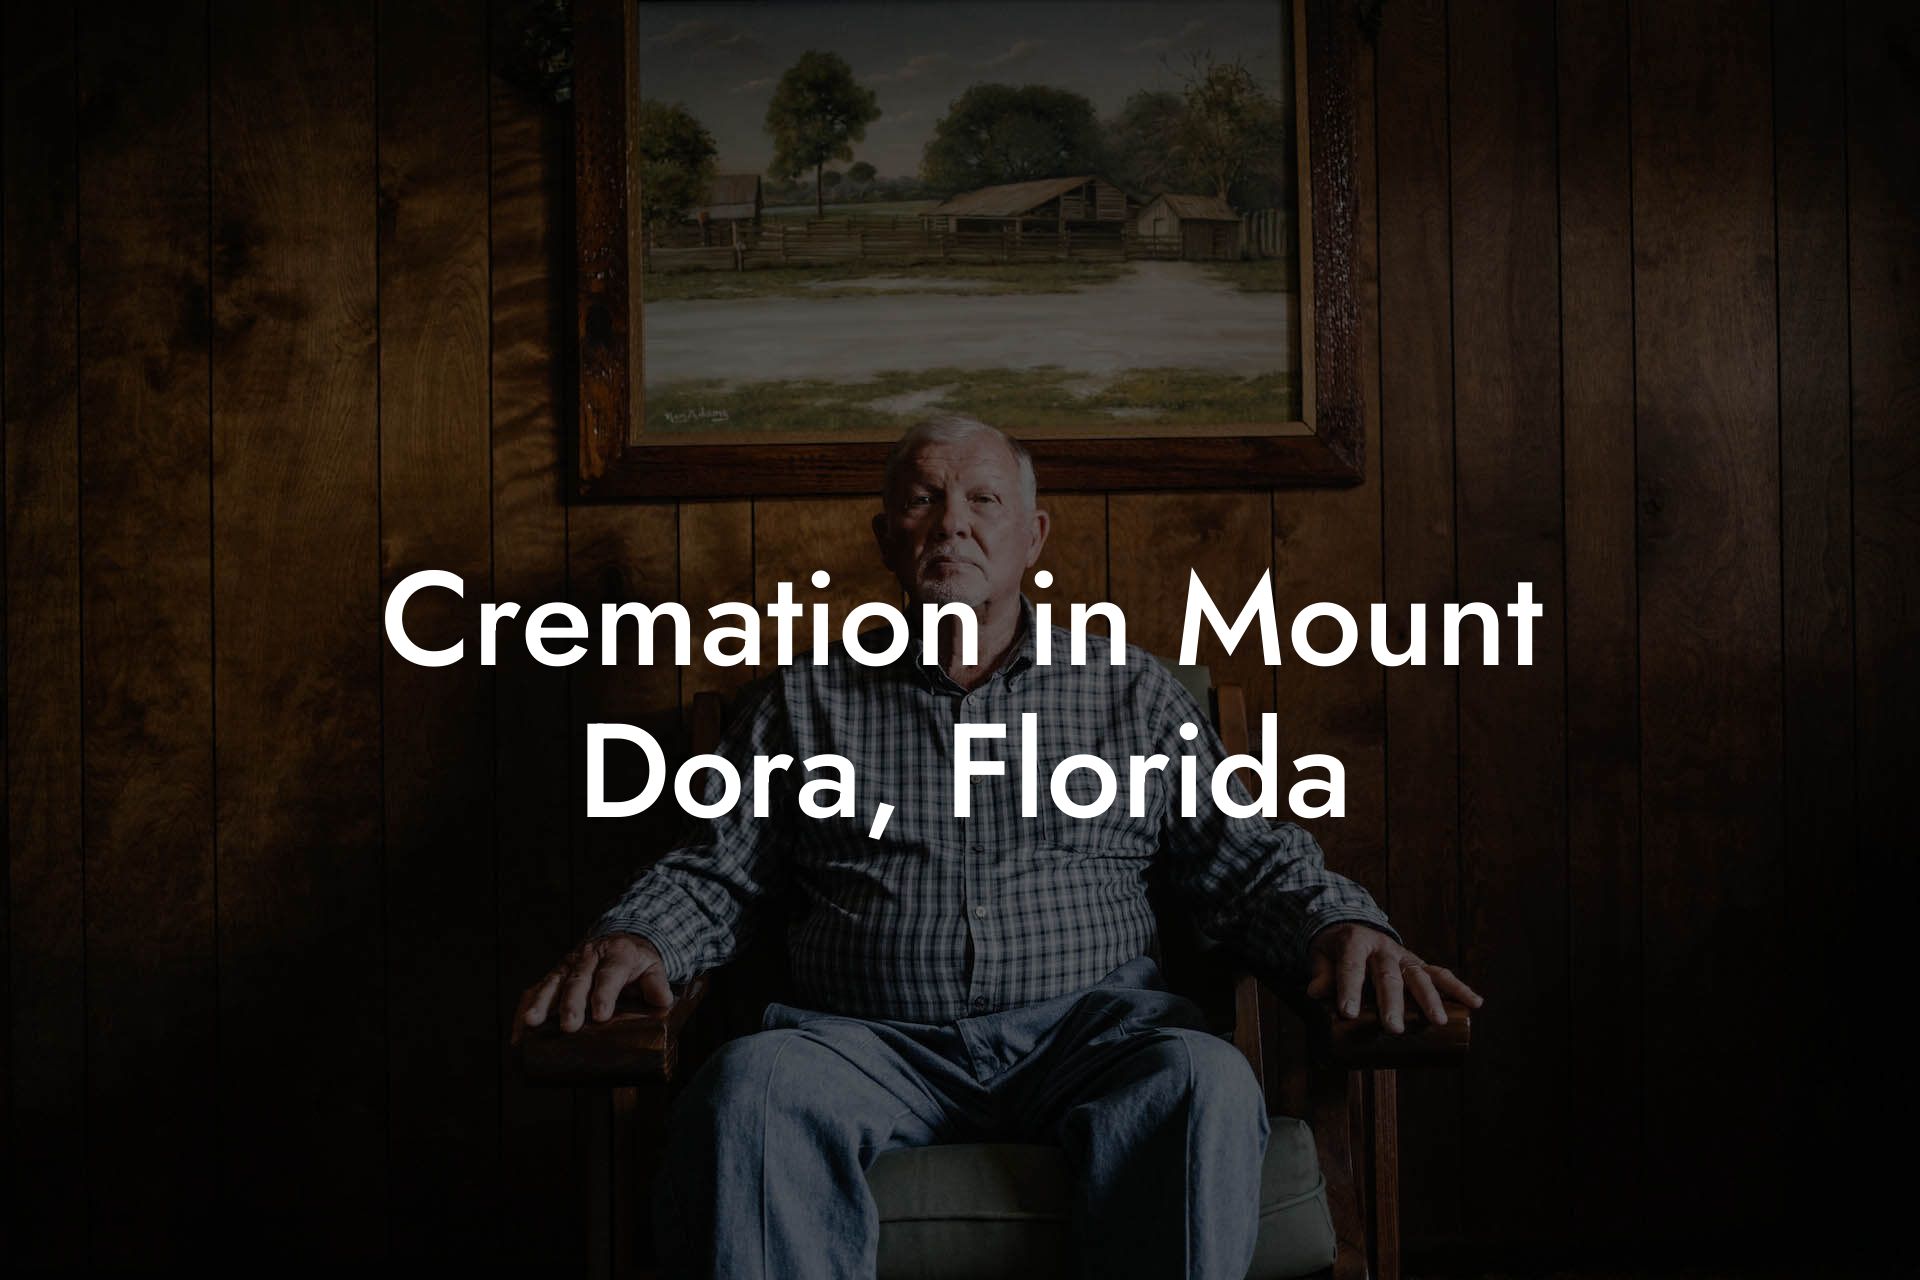 Cremation in Mount Dora, Florida